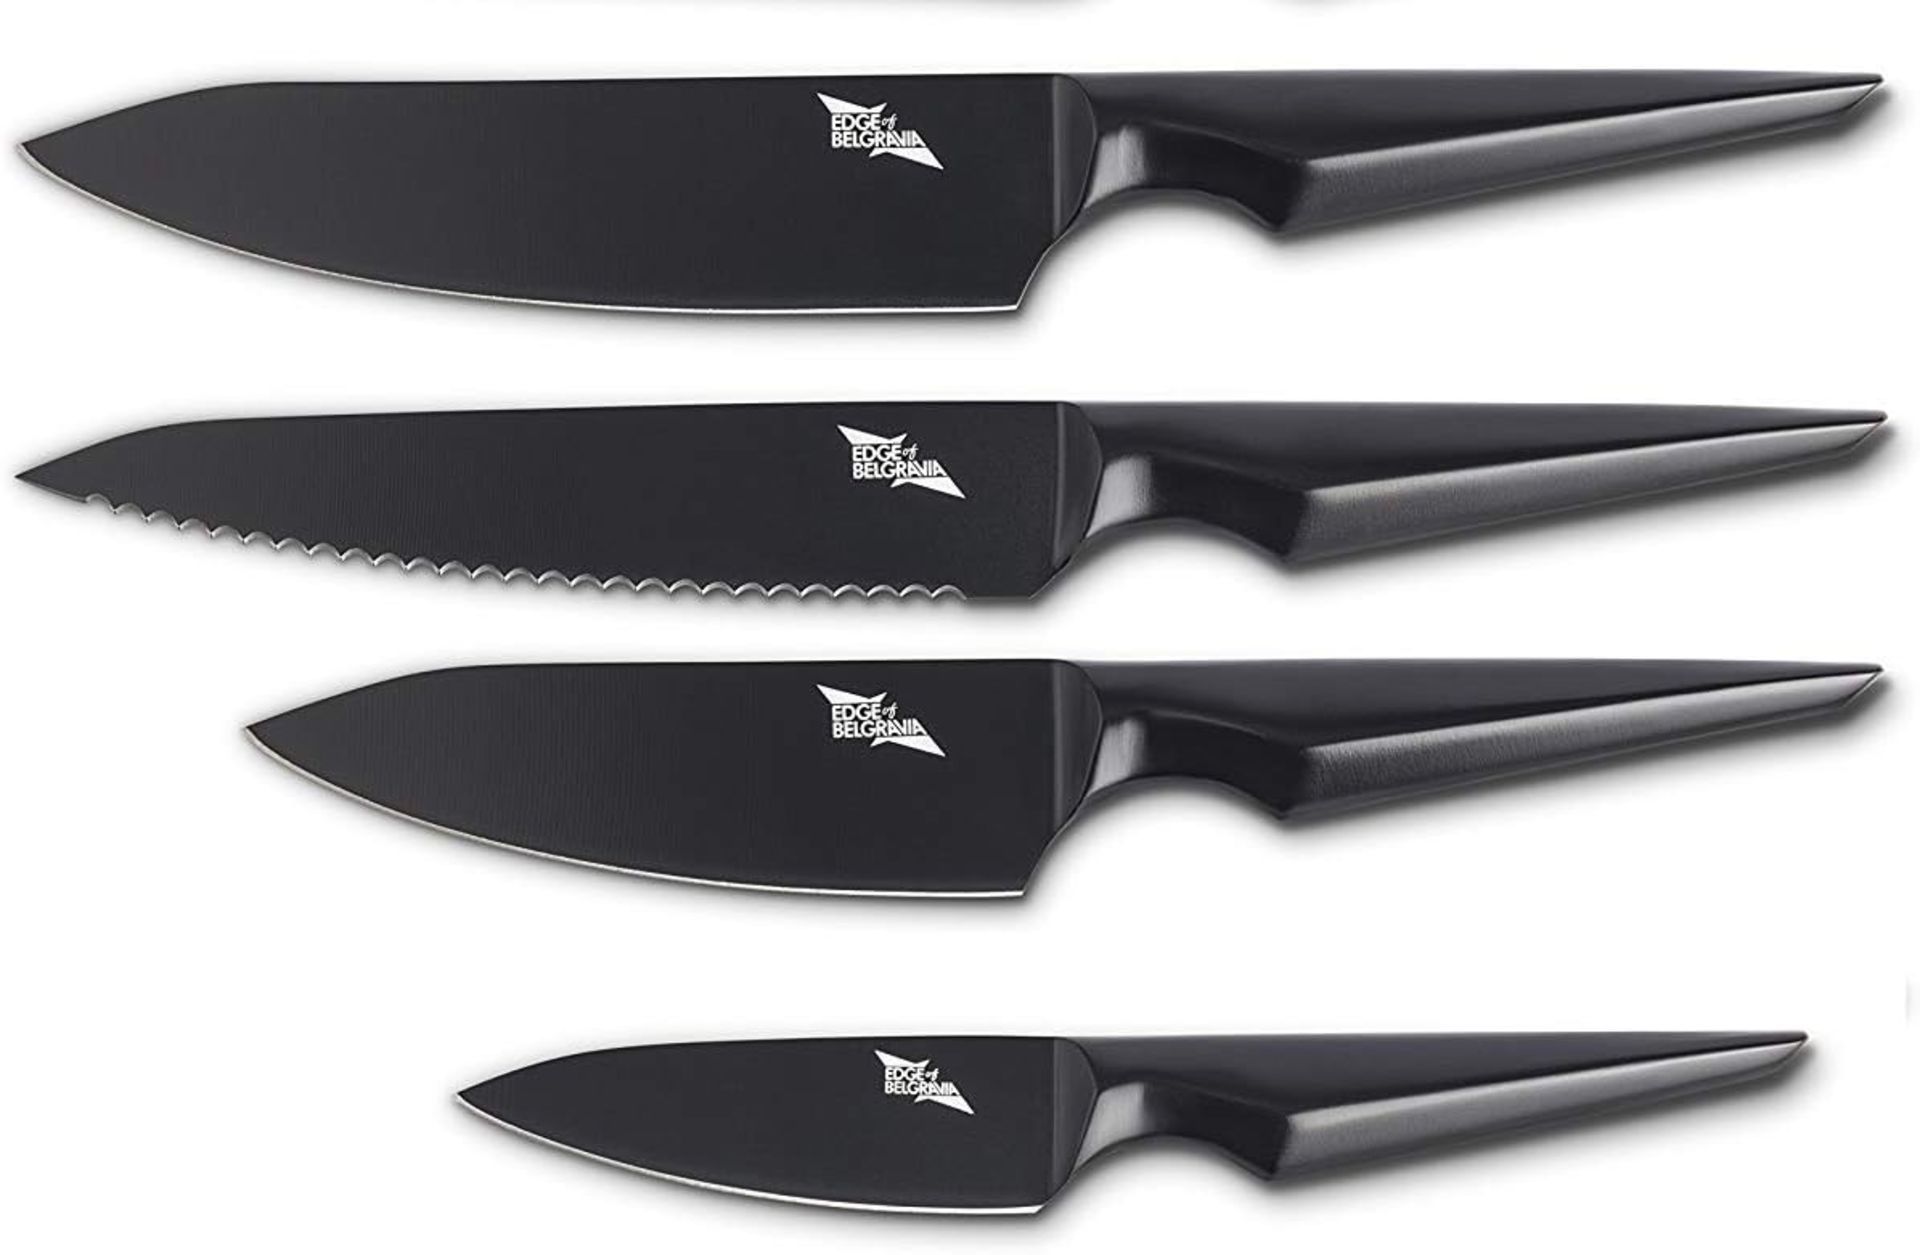 TRADE LOT 8 X BRAND NEW EDGE OF BELGRAVIA Galatine Chef Knife Set 4pcs, Professional Chef Knife Set,